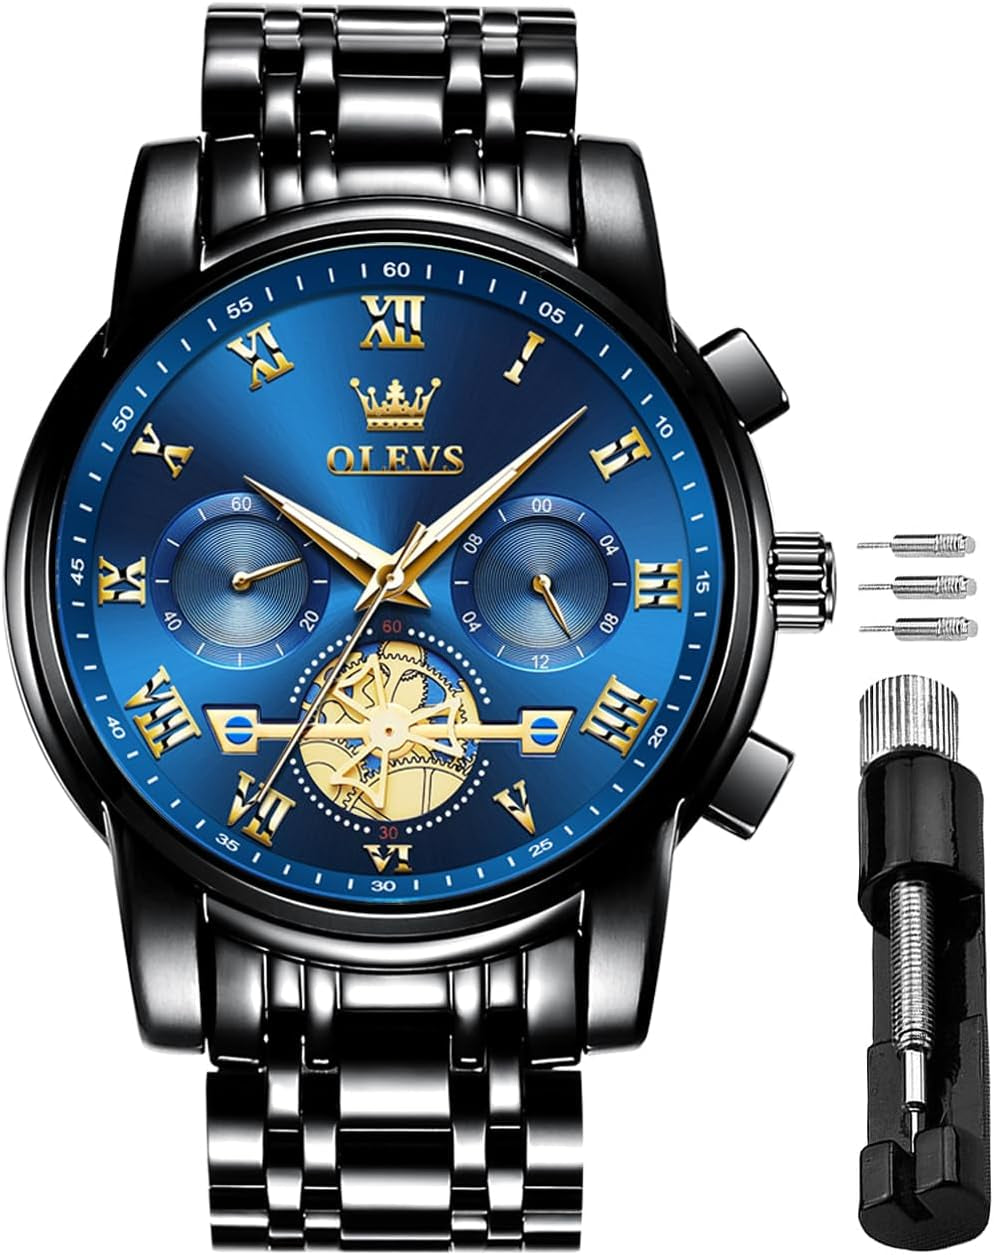 Men'S Waterproof Watches Stainless Steel Waterproof Chronograph Wrist Watches Luxury Dress White Luminous Big Face Analog Quartz Male Watches